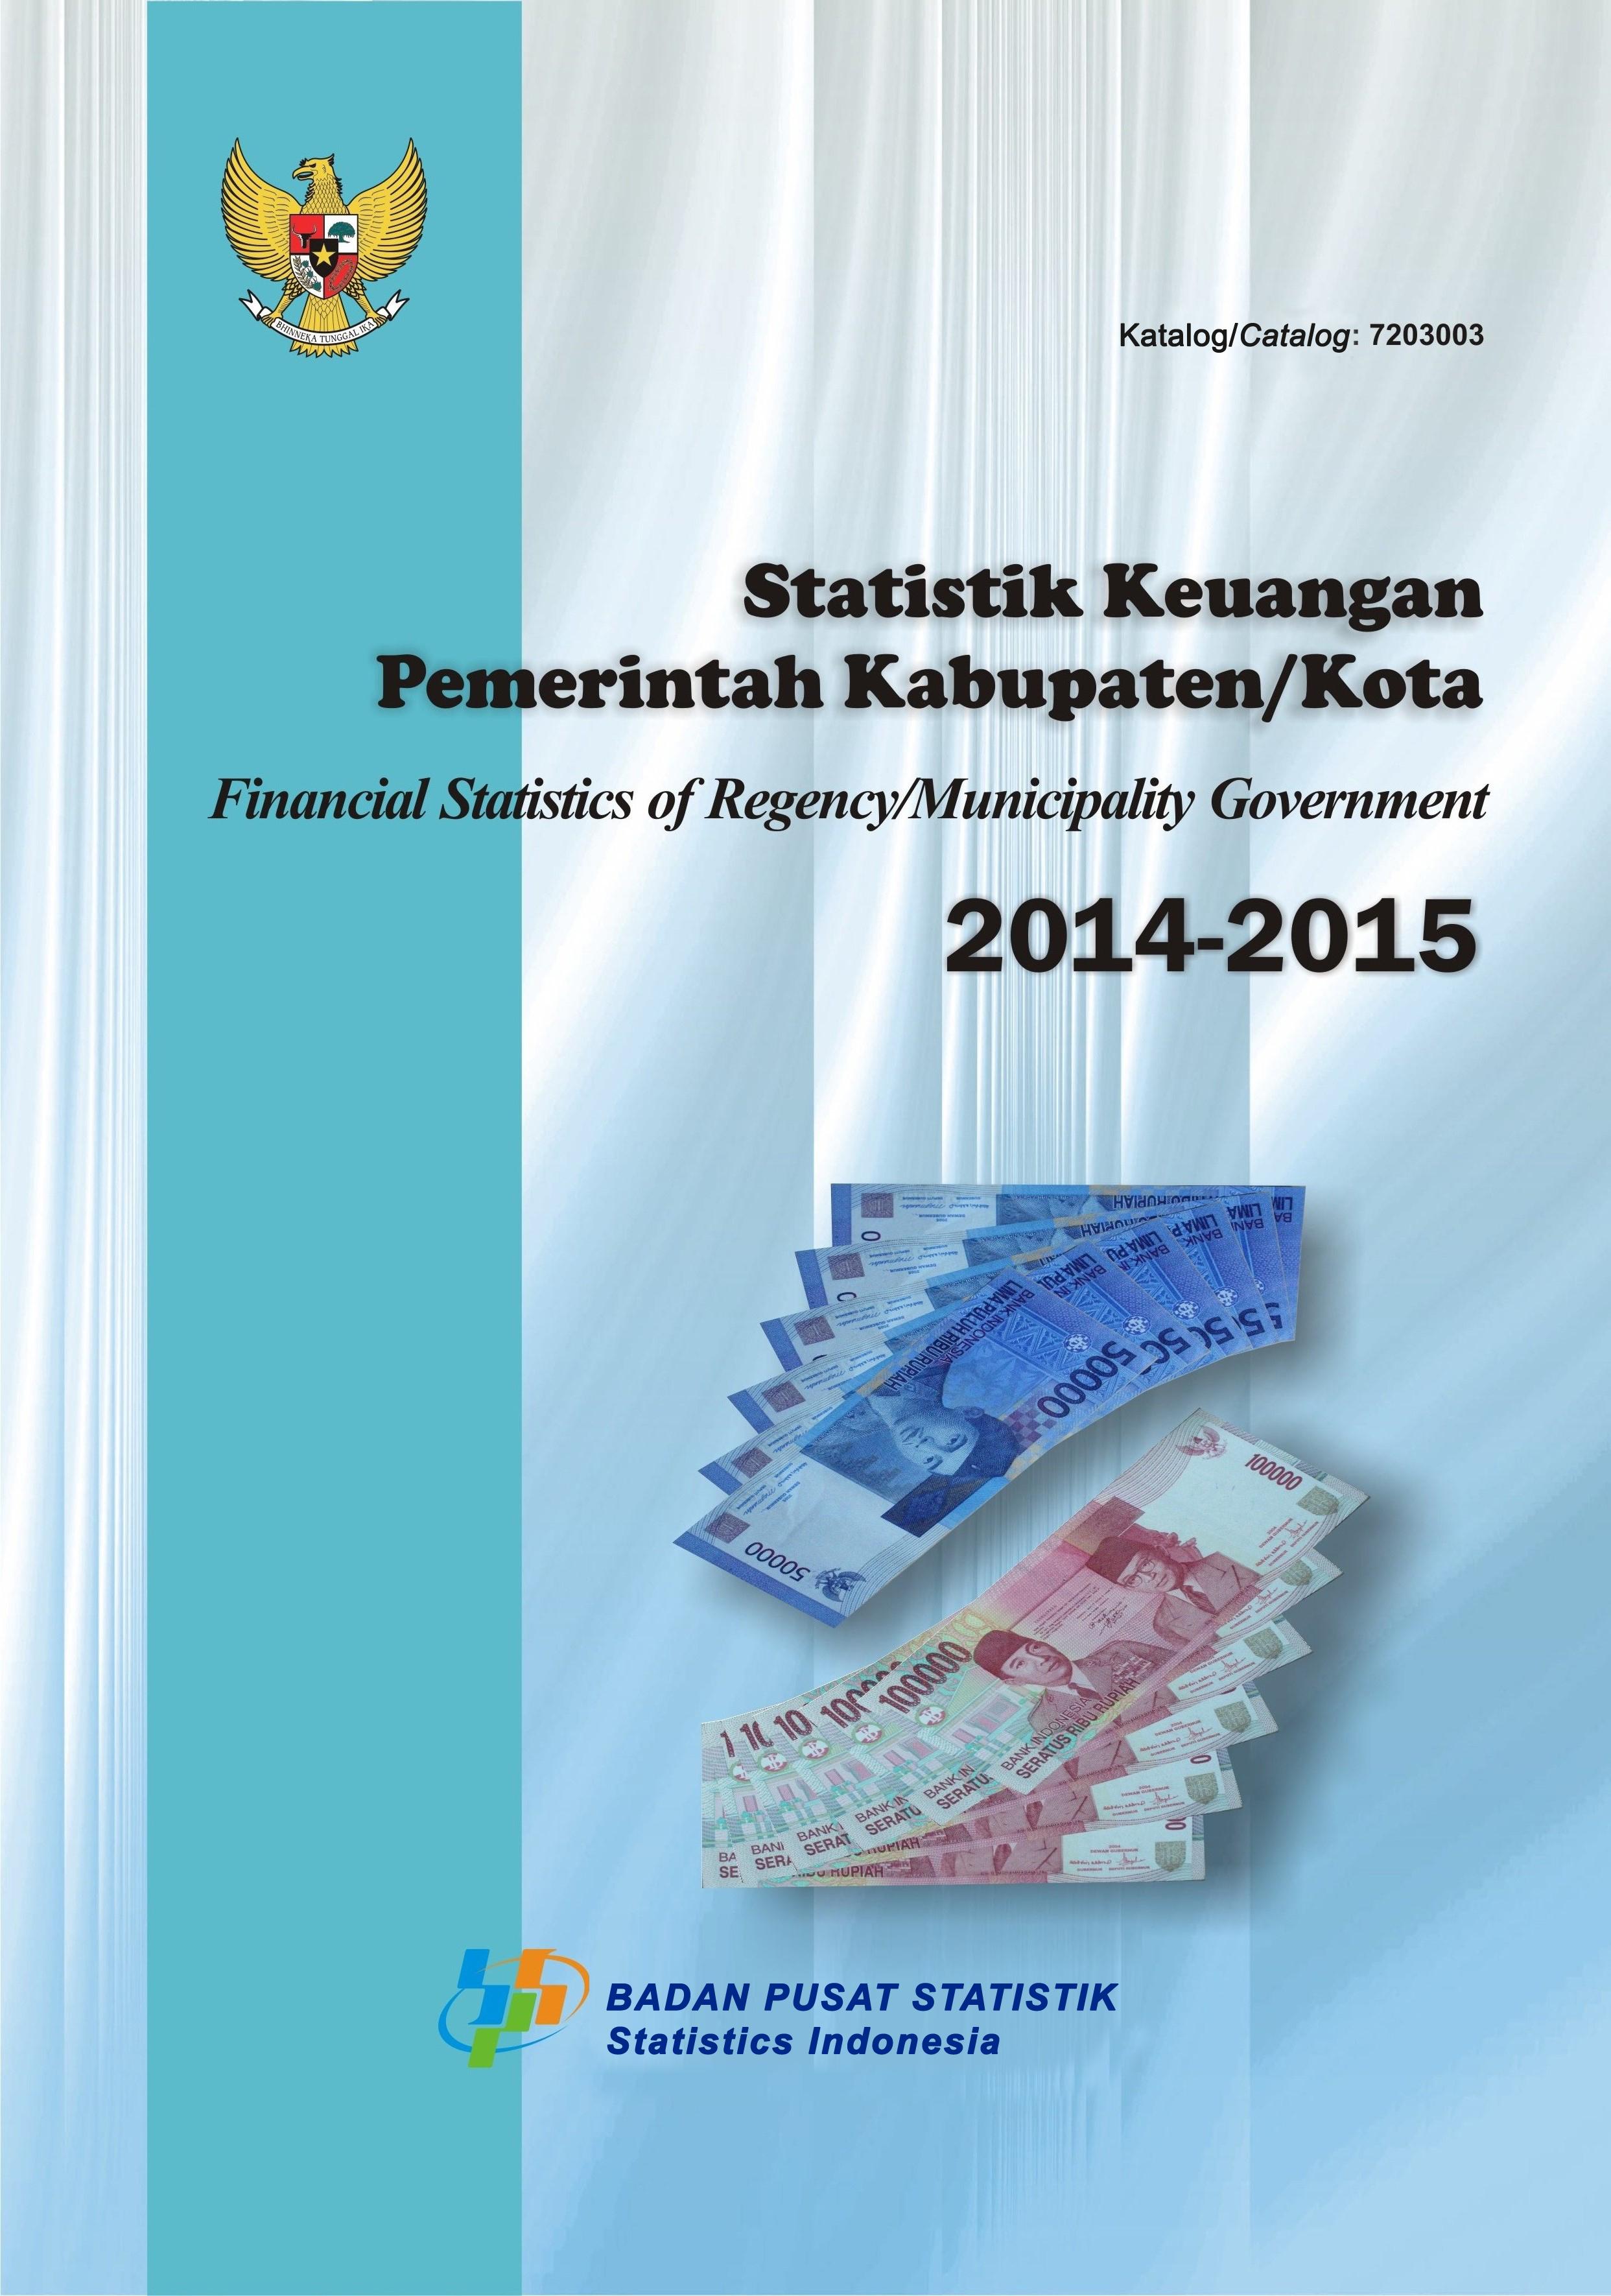 Financial Statistics of Regency/Municipality Government 2014-2015